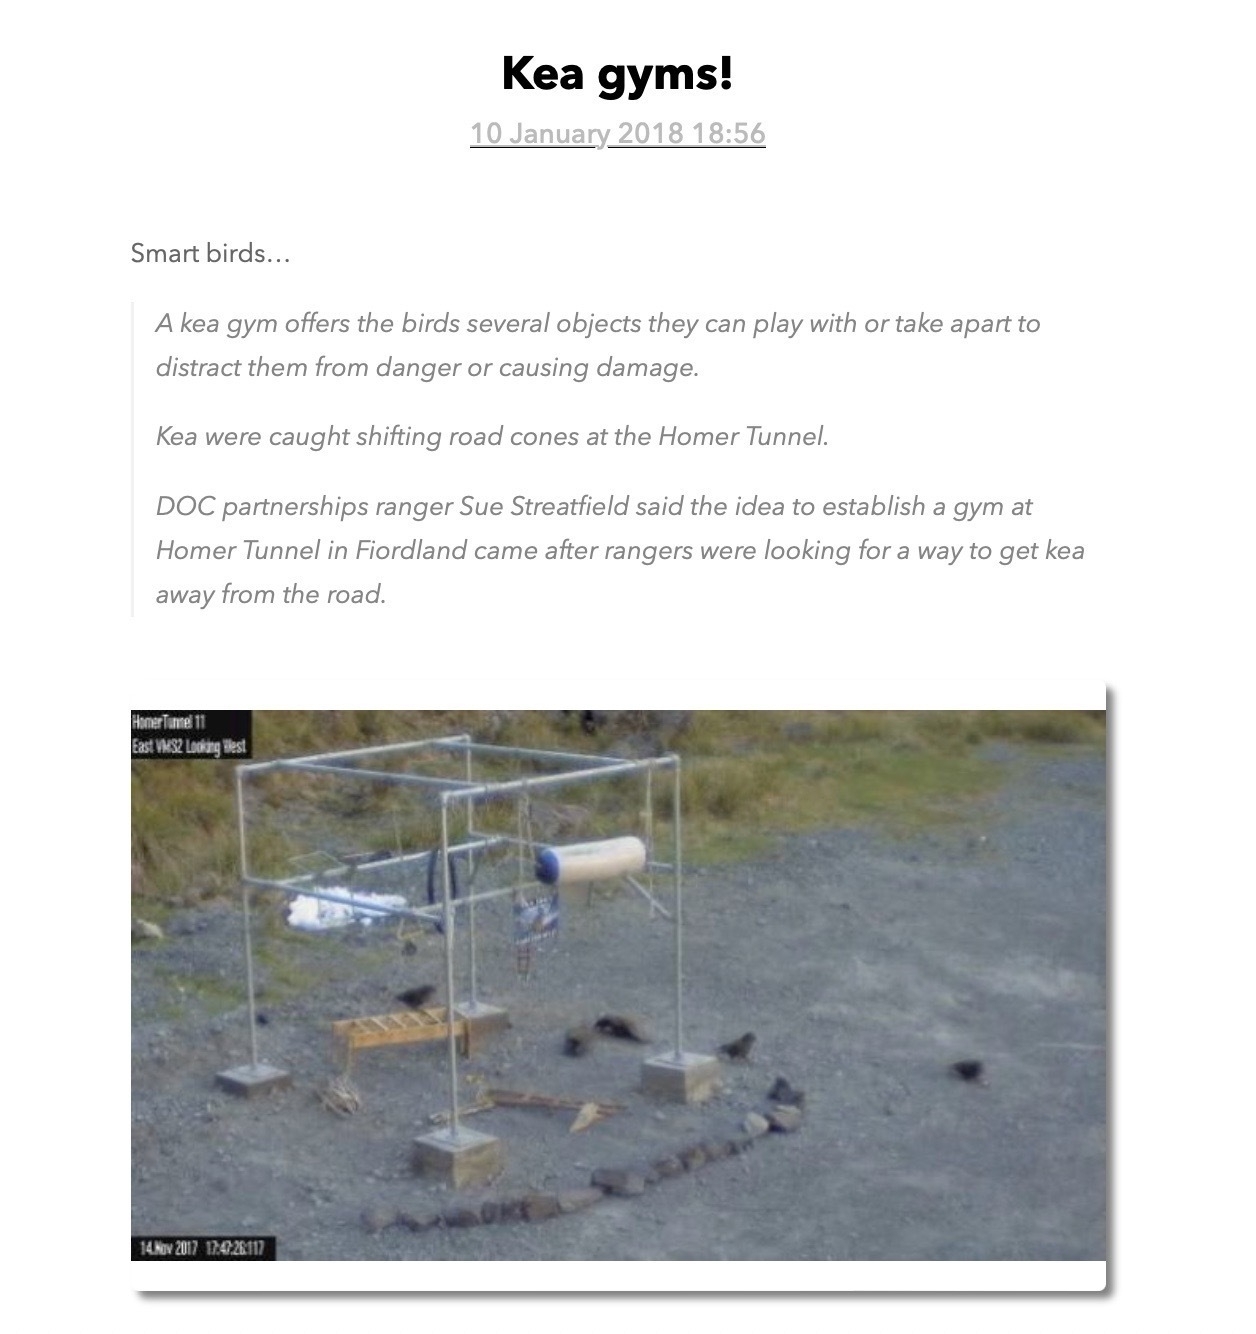 Screenshot of a blog post about Kea Gyms.